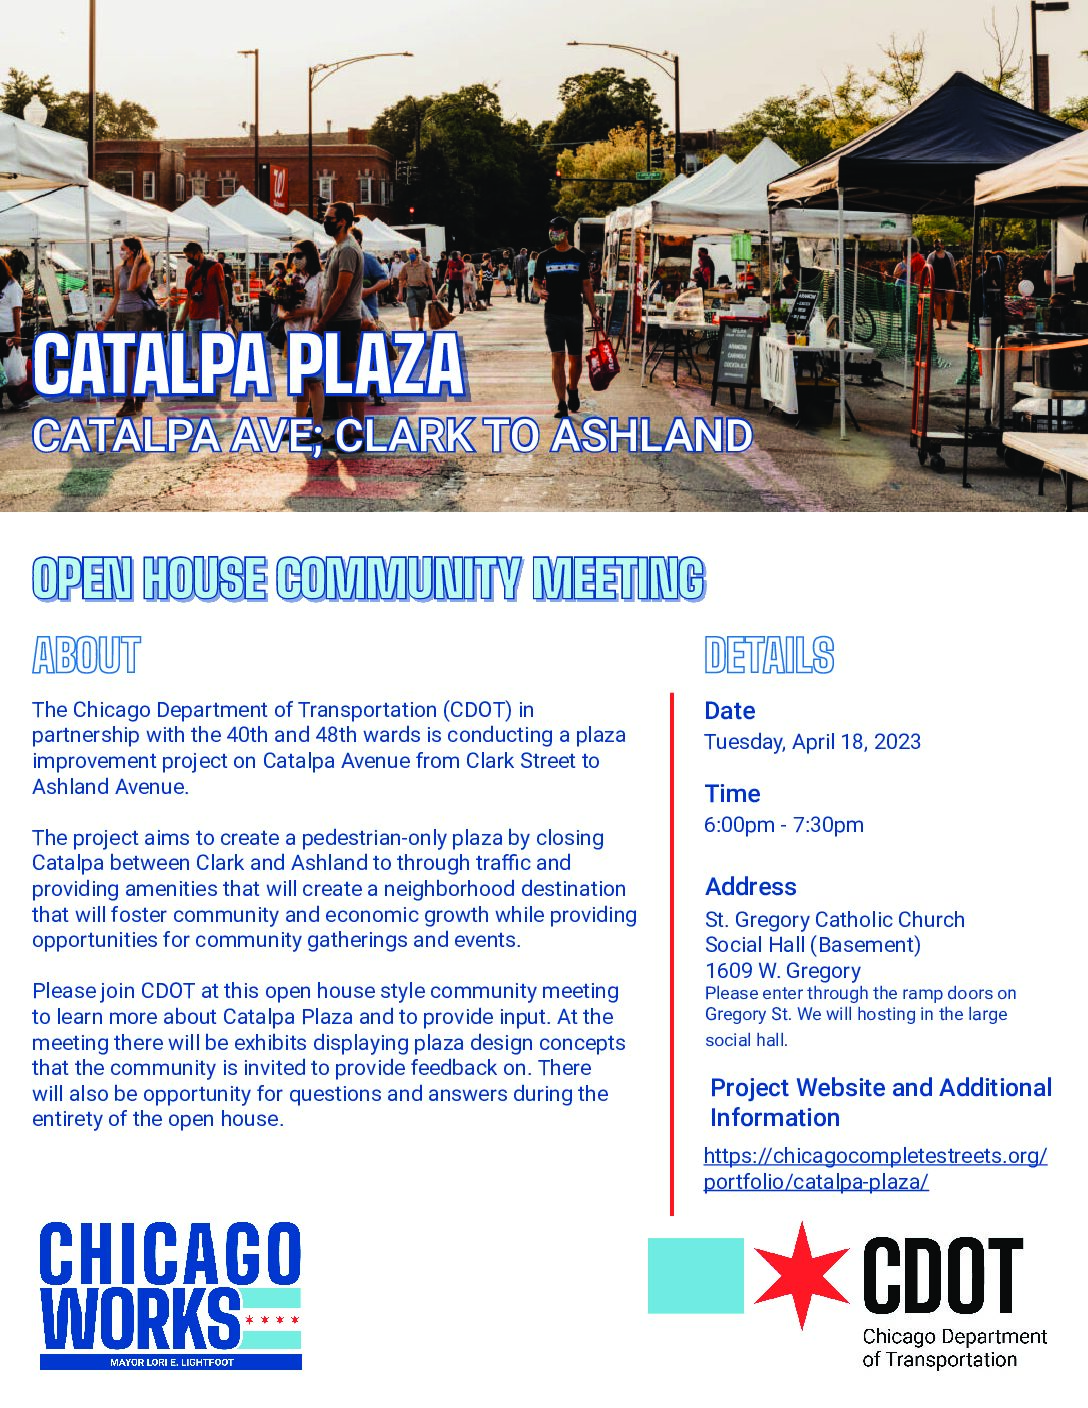 Catalpa Plaza Open House Community Meeting